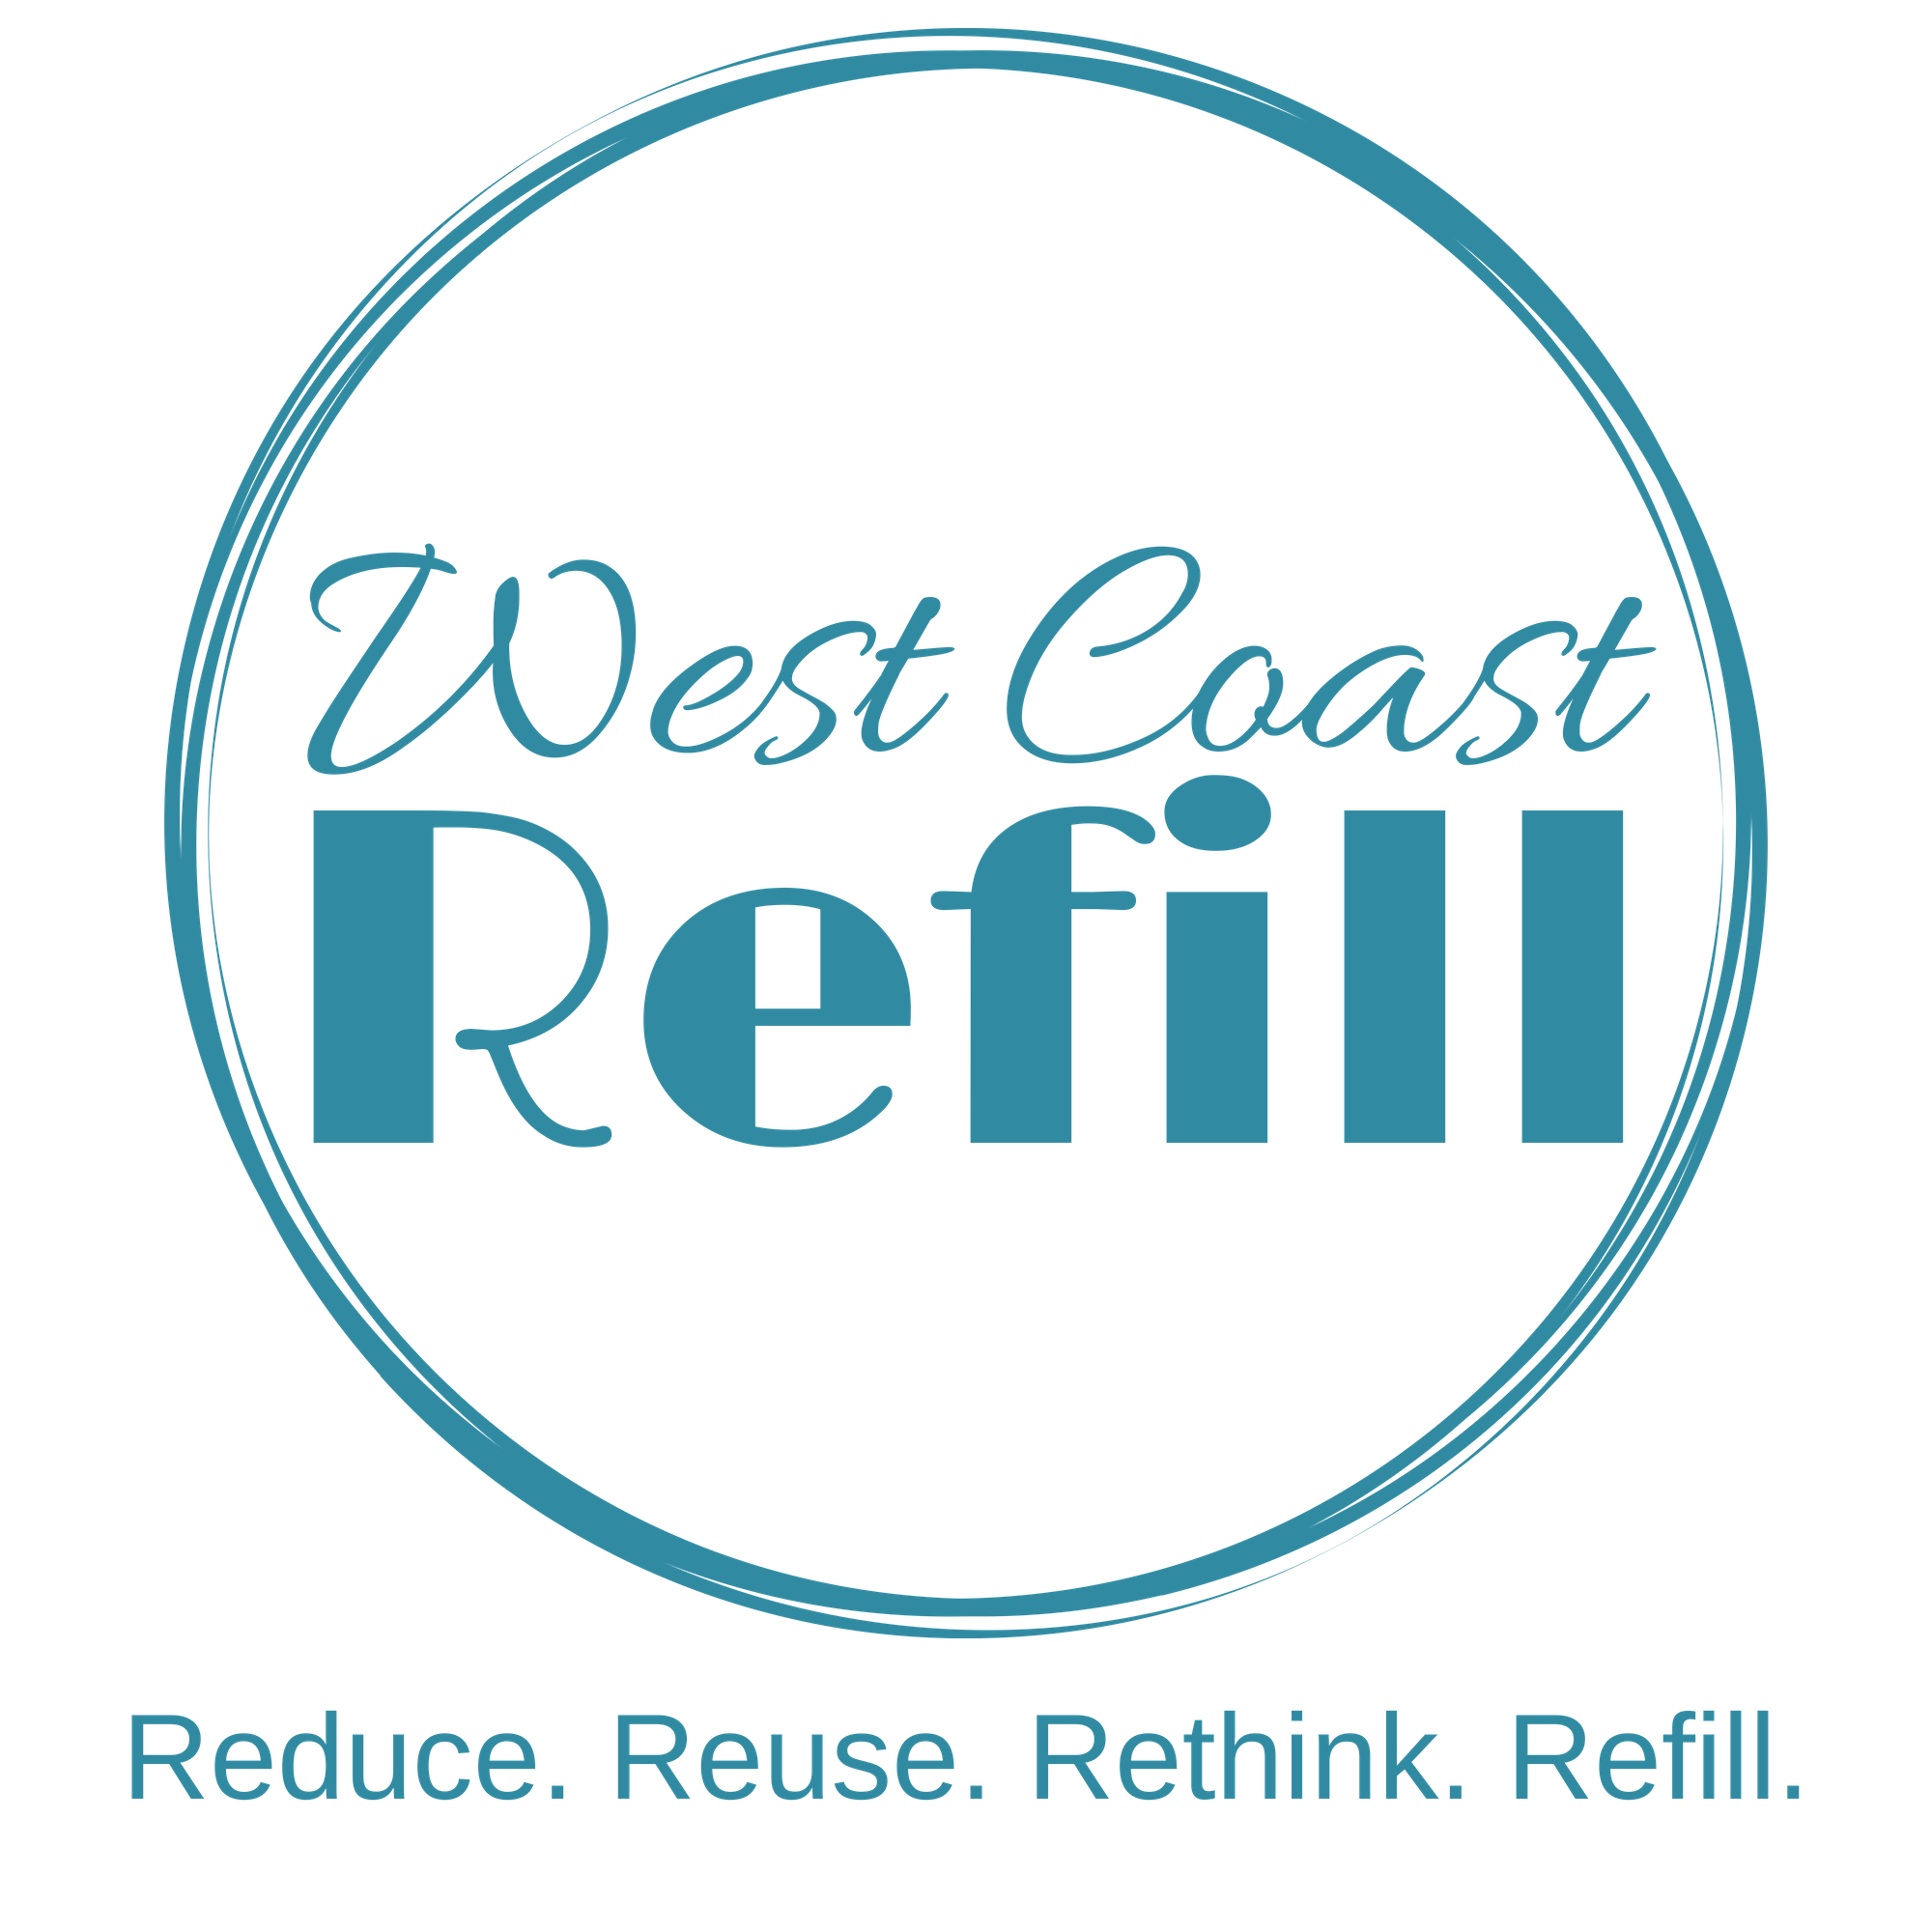 West Coast Refill